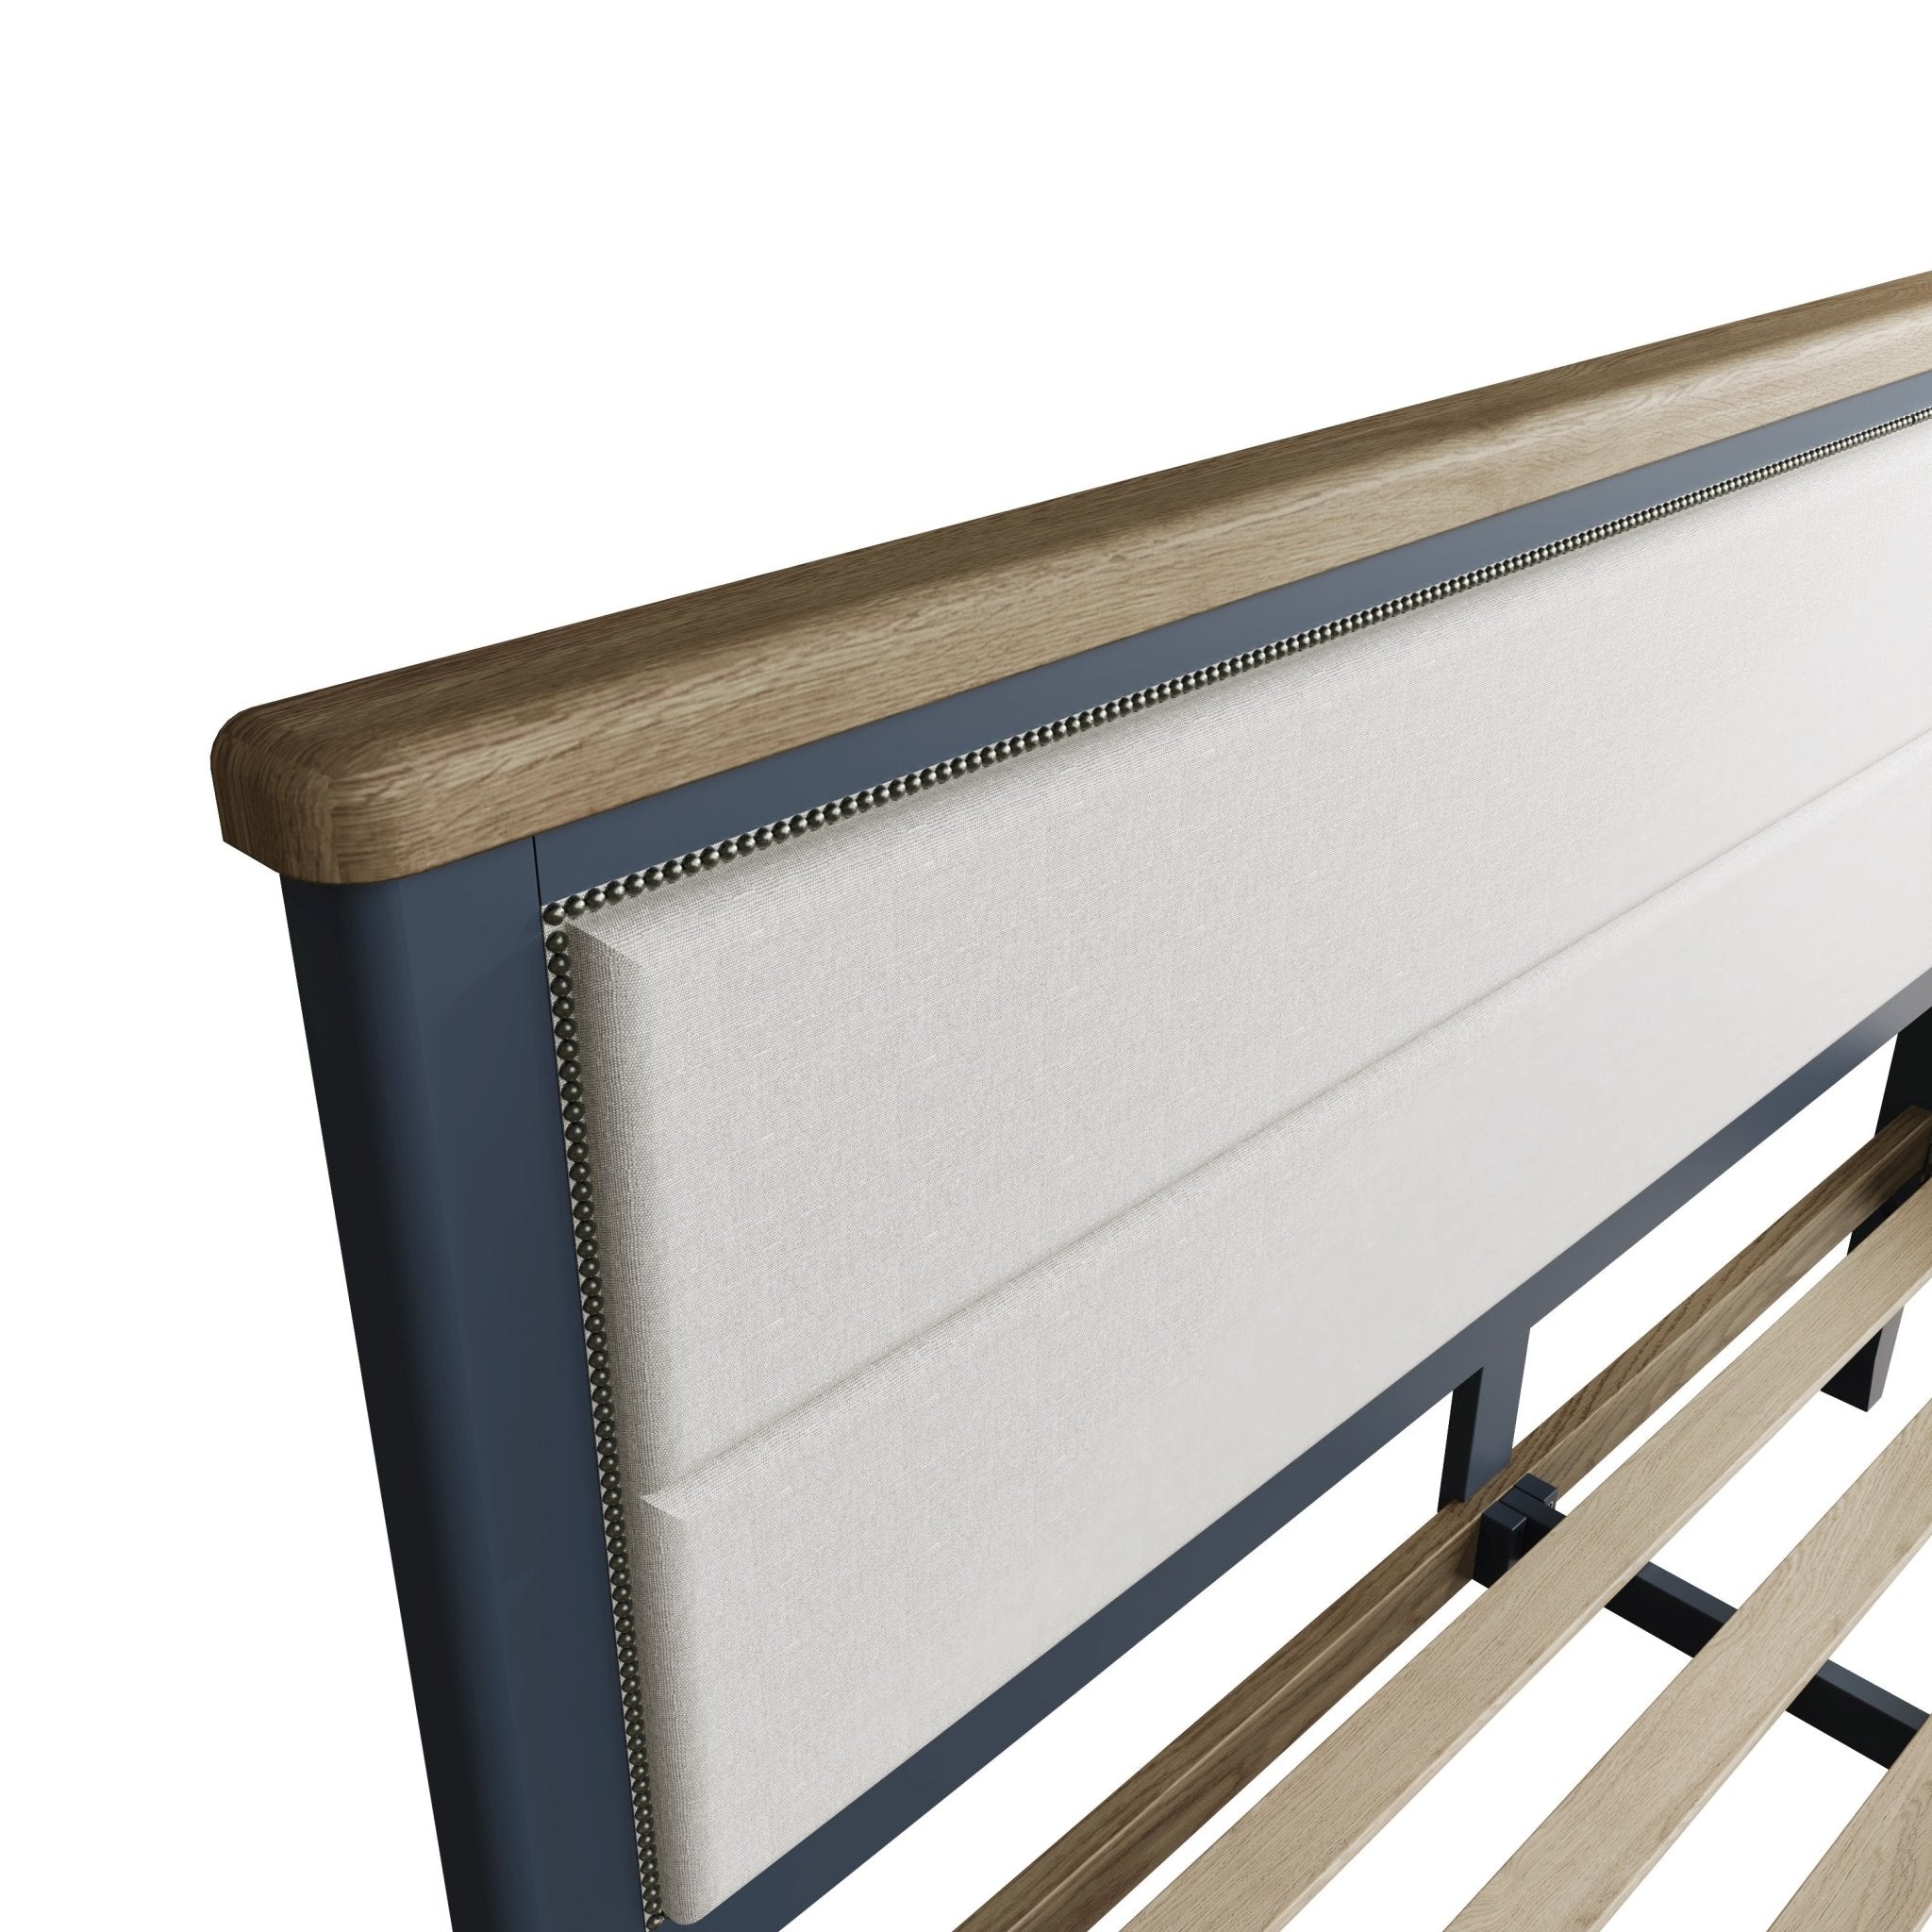 Rogate Blue 6'0 Super King size Bed Frame - Fabric Headboard - Duck Barn Interiors